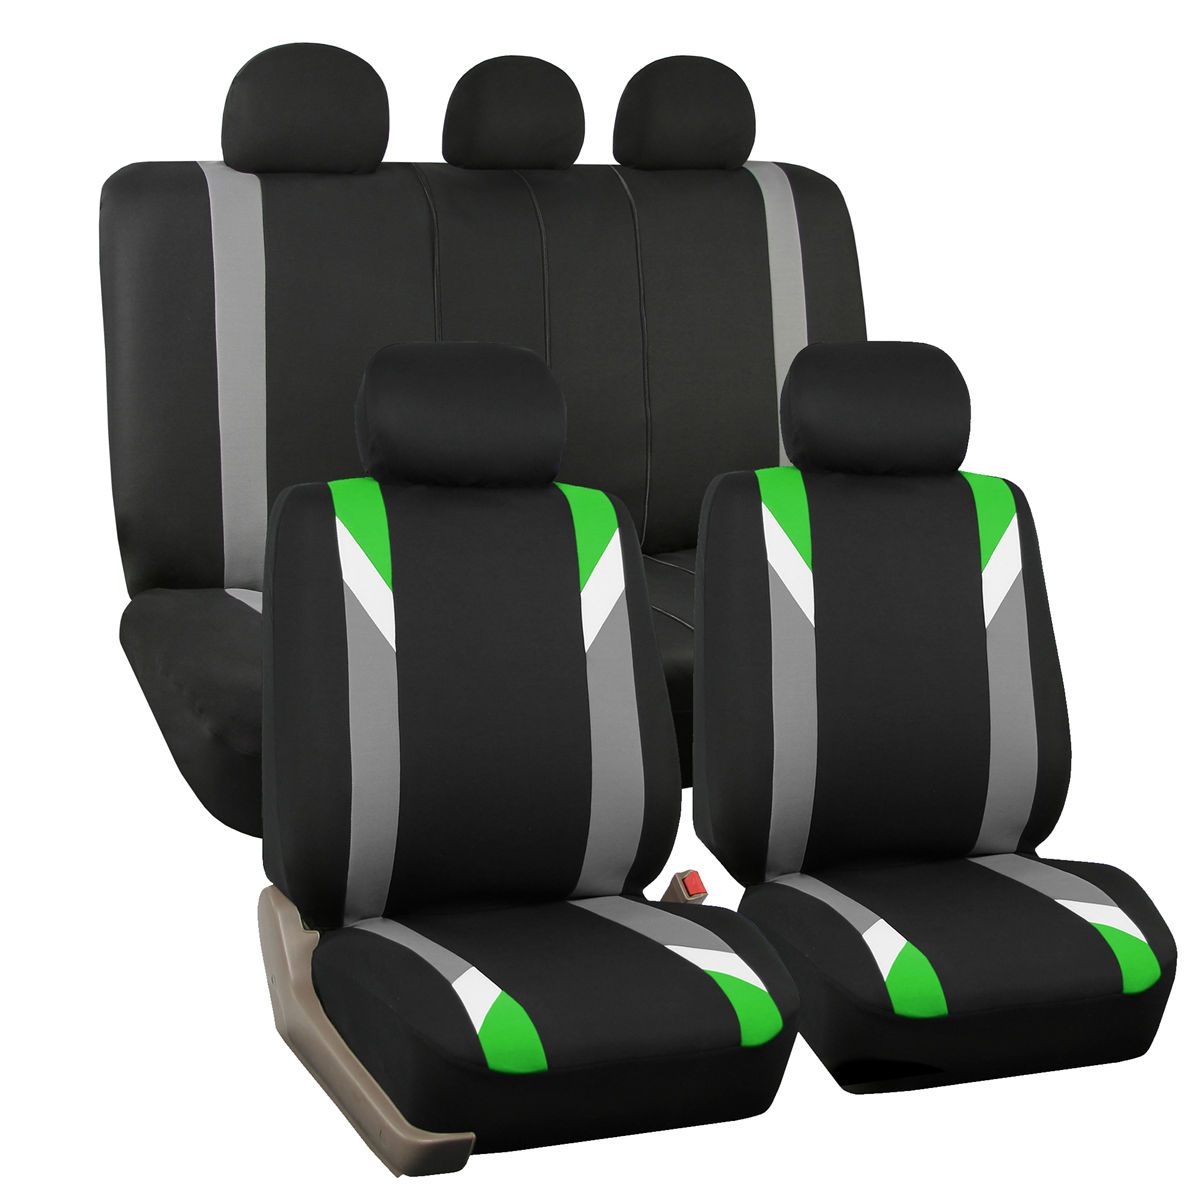 Premium Modernistic Seat Covers - Full Set Green